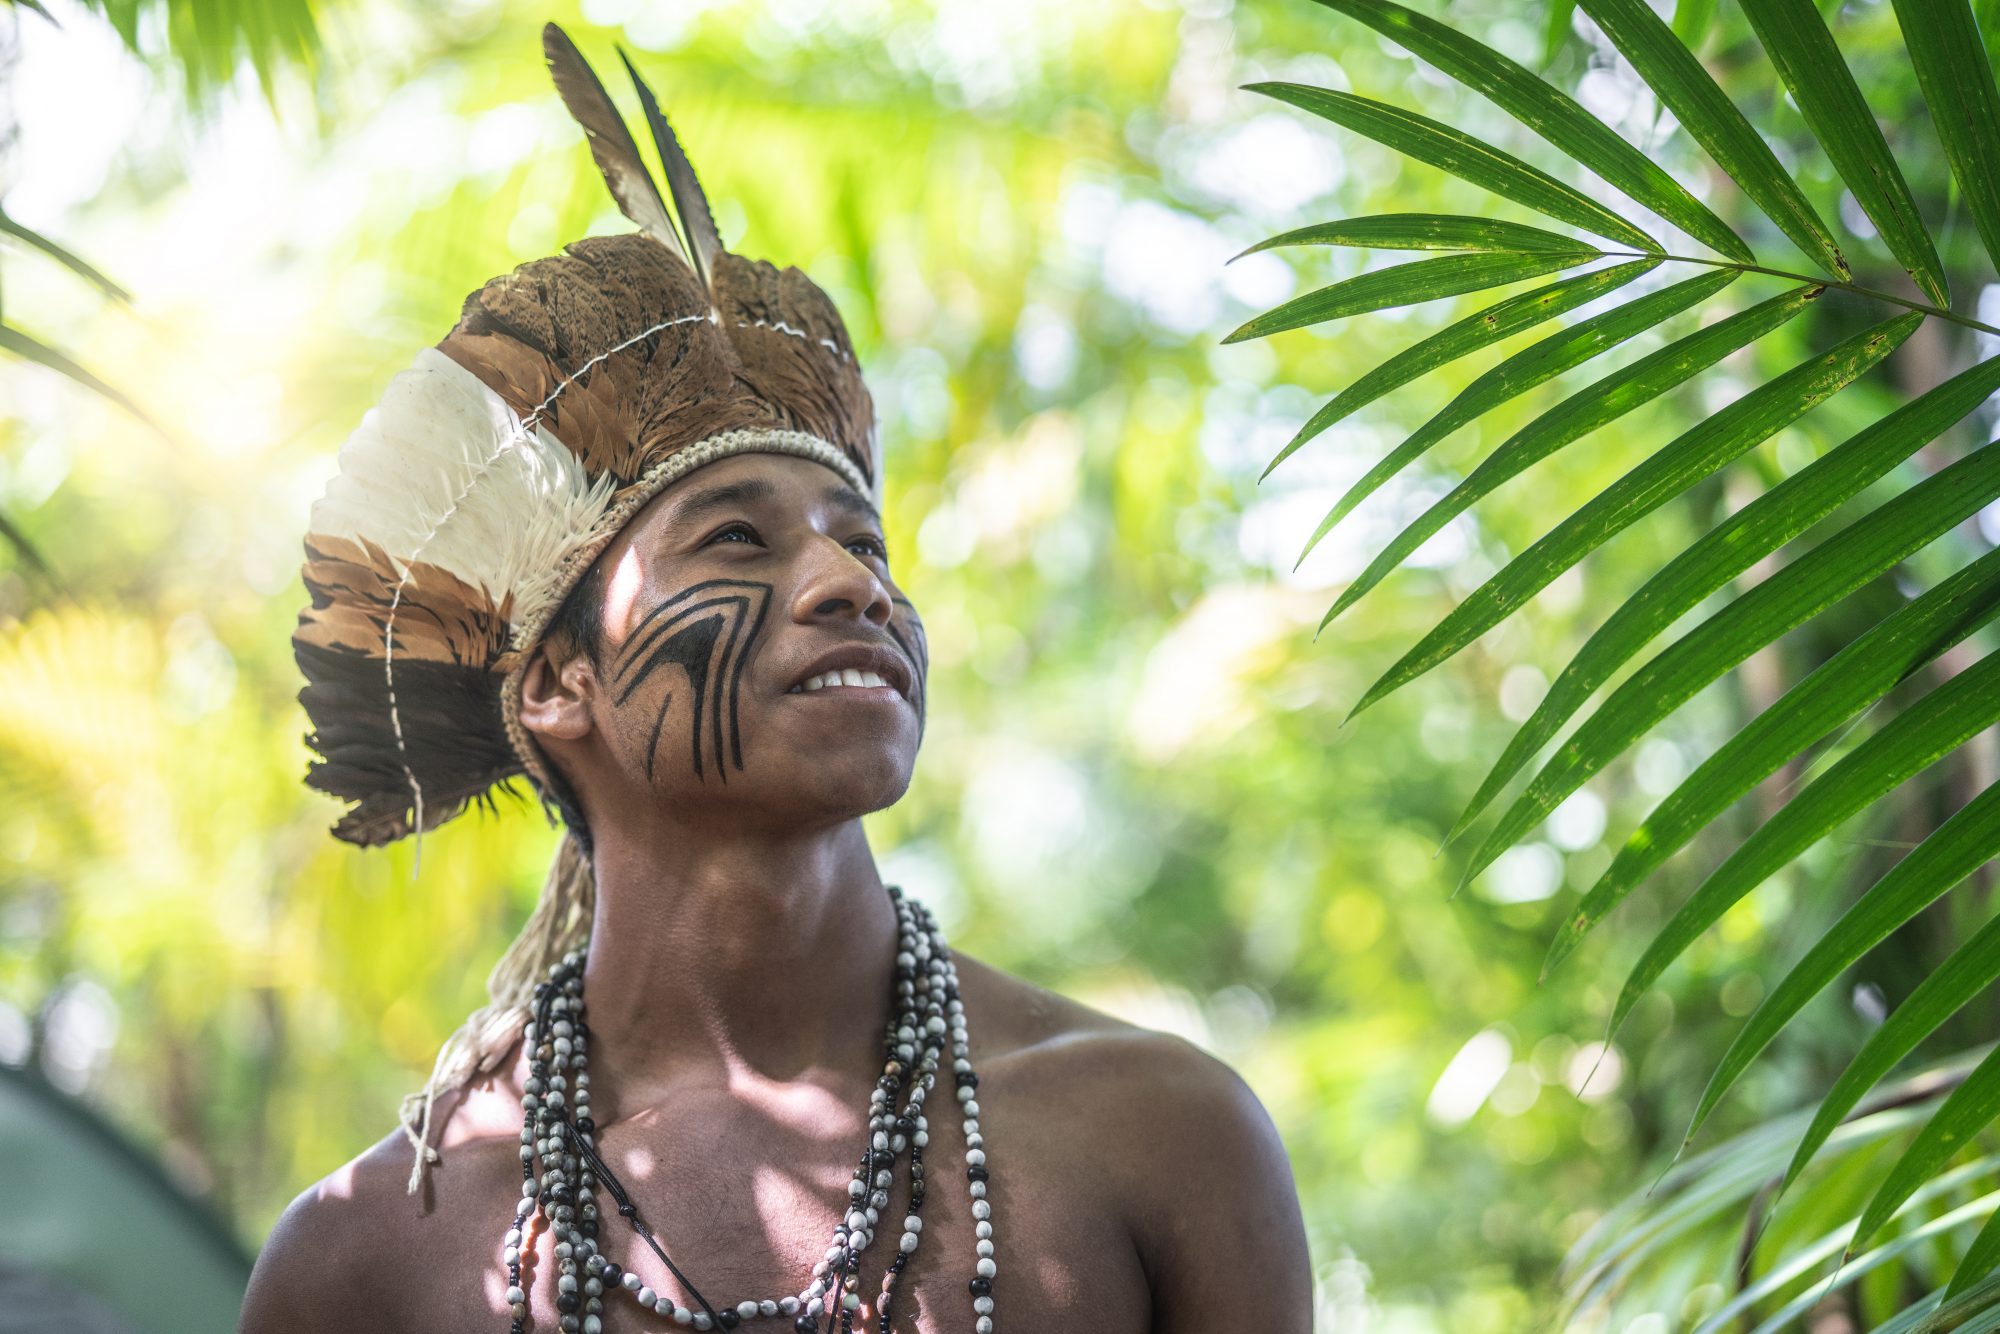 Brazilian indigenous man